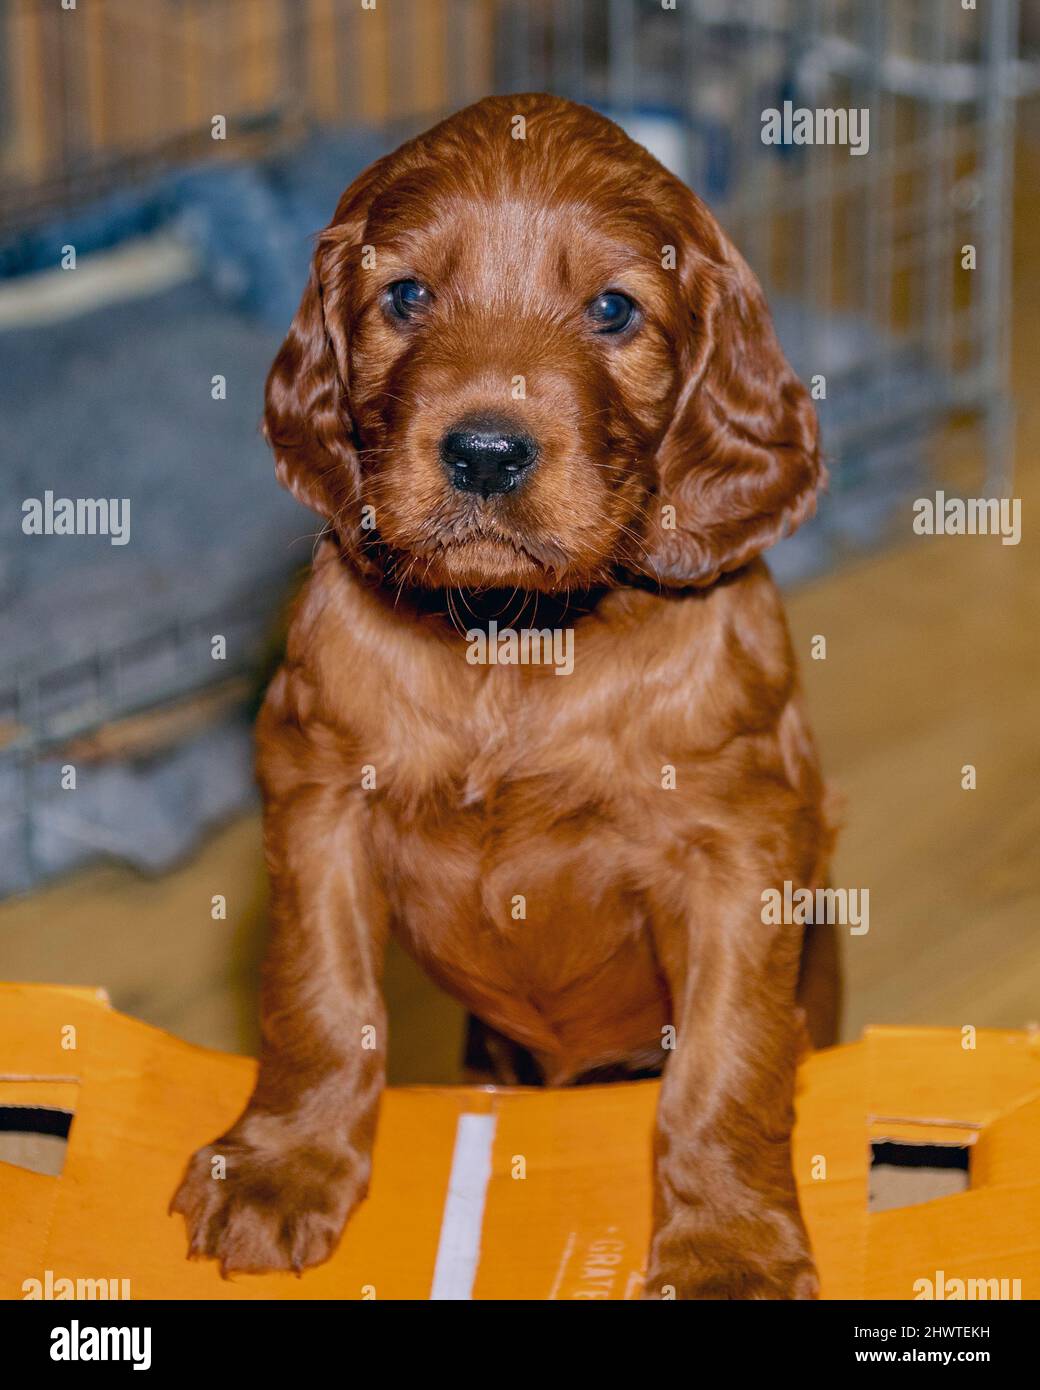 5 week old Irish Setter puppy standing on cardboard box in playpen. Stock Photo